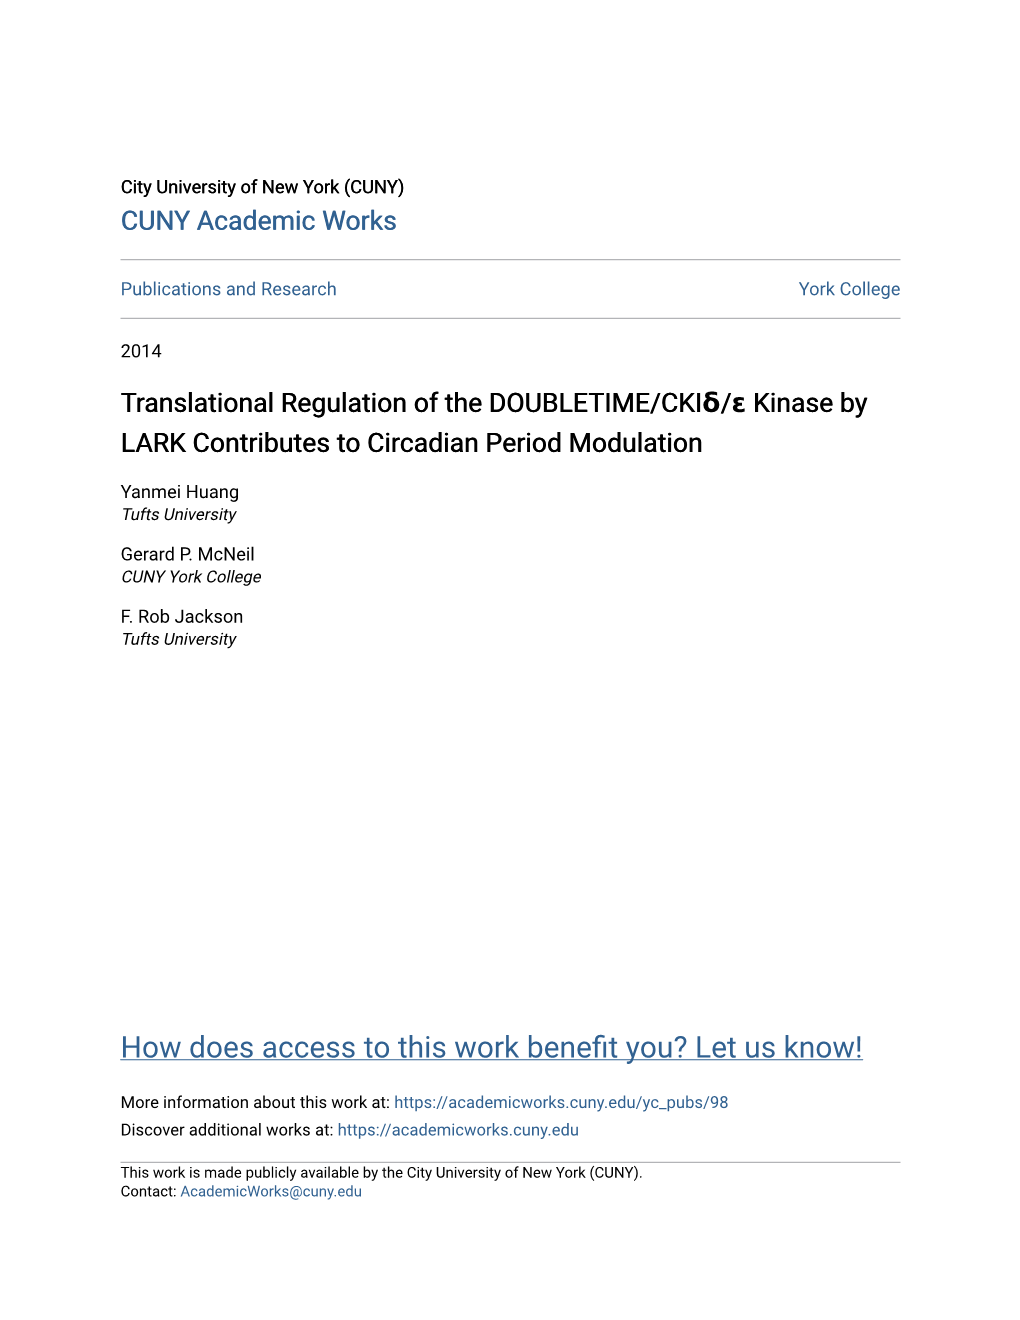 Translational Regulation of the DOUBLETIME/CKIÎ´/Îµ Kinase By